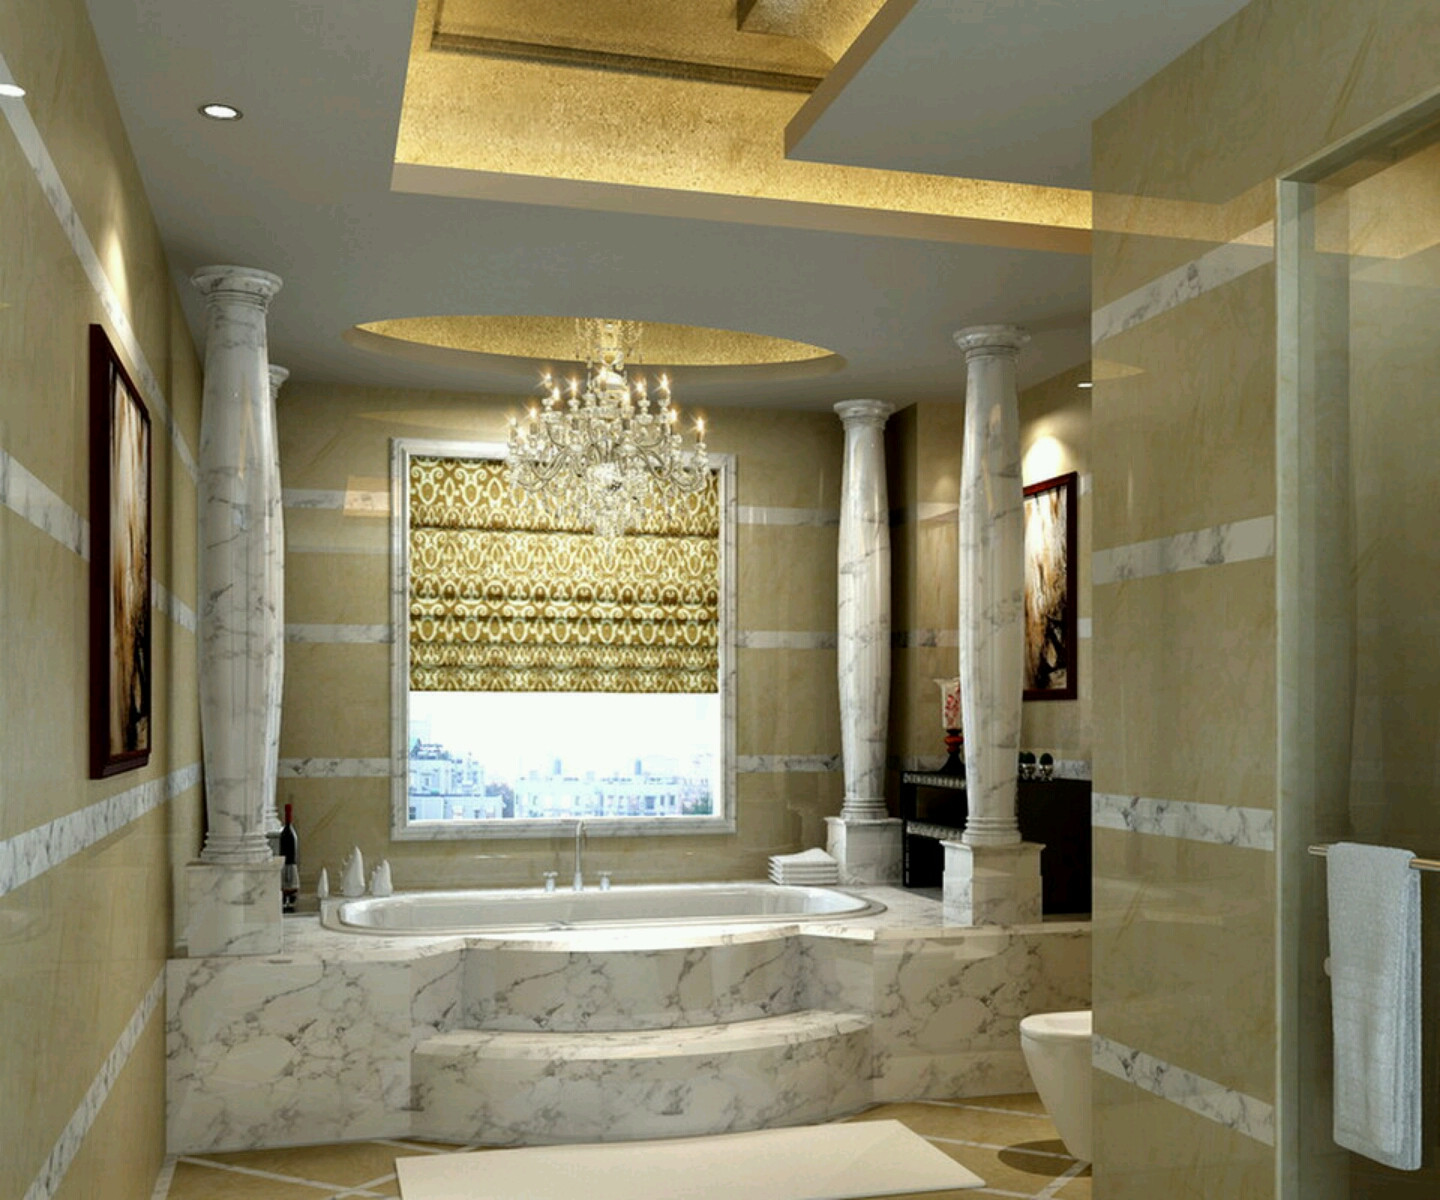 Luxury Bathroom Designs Gallery
 Luxury bathrooms designs Furniture Gallery